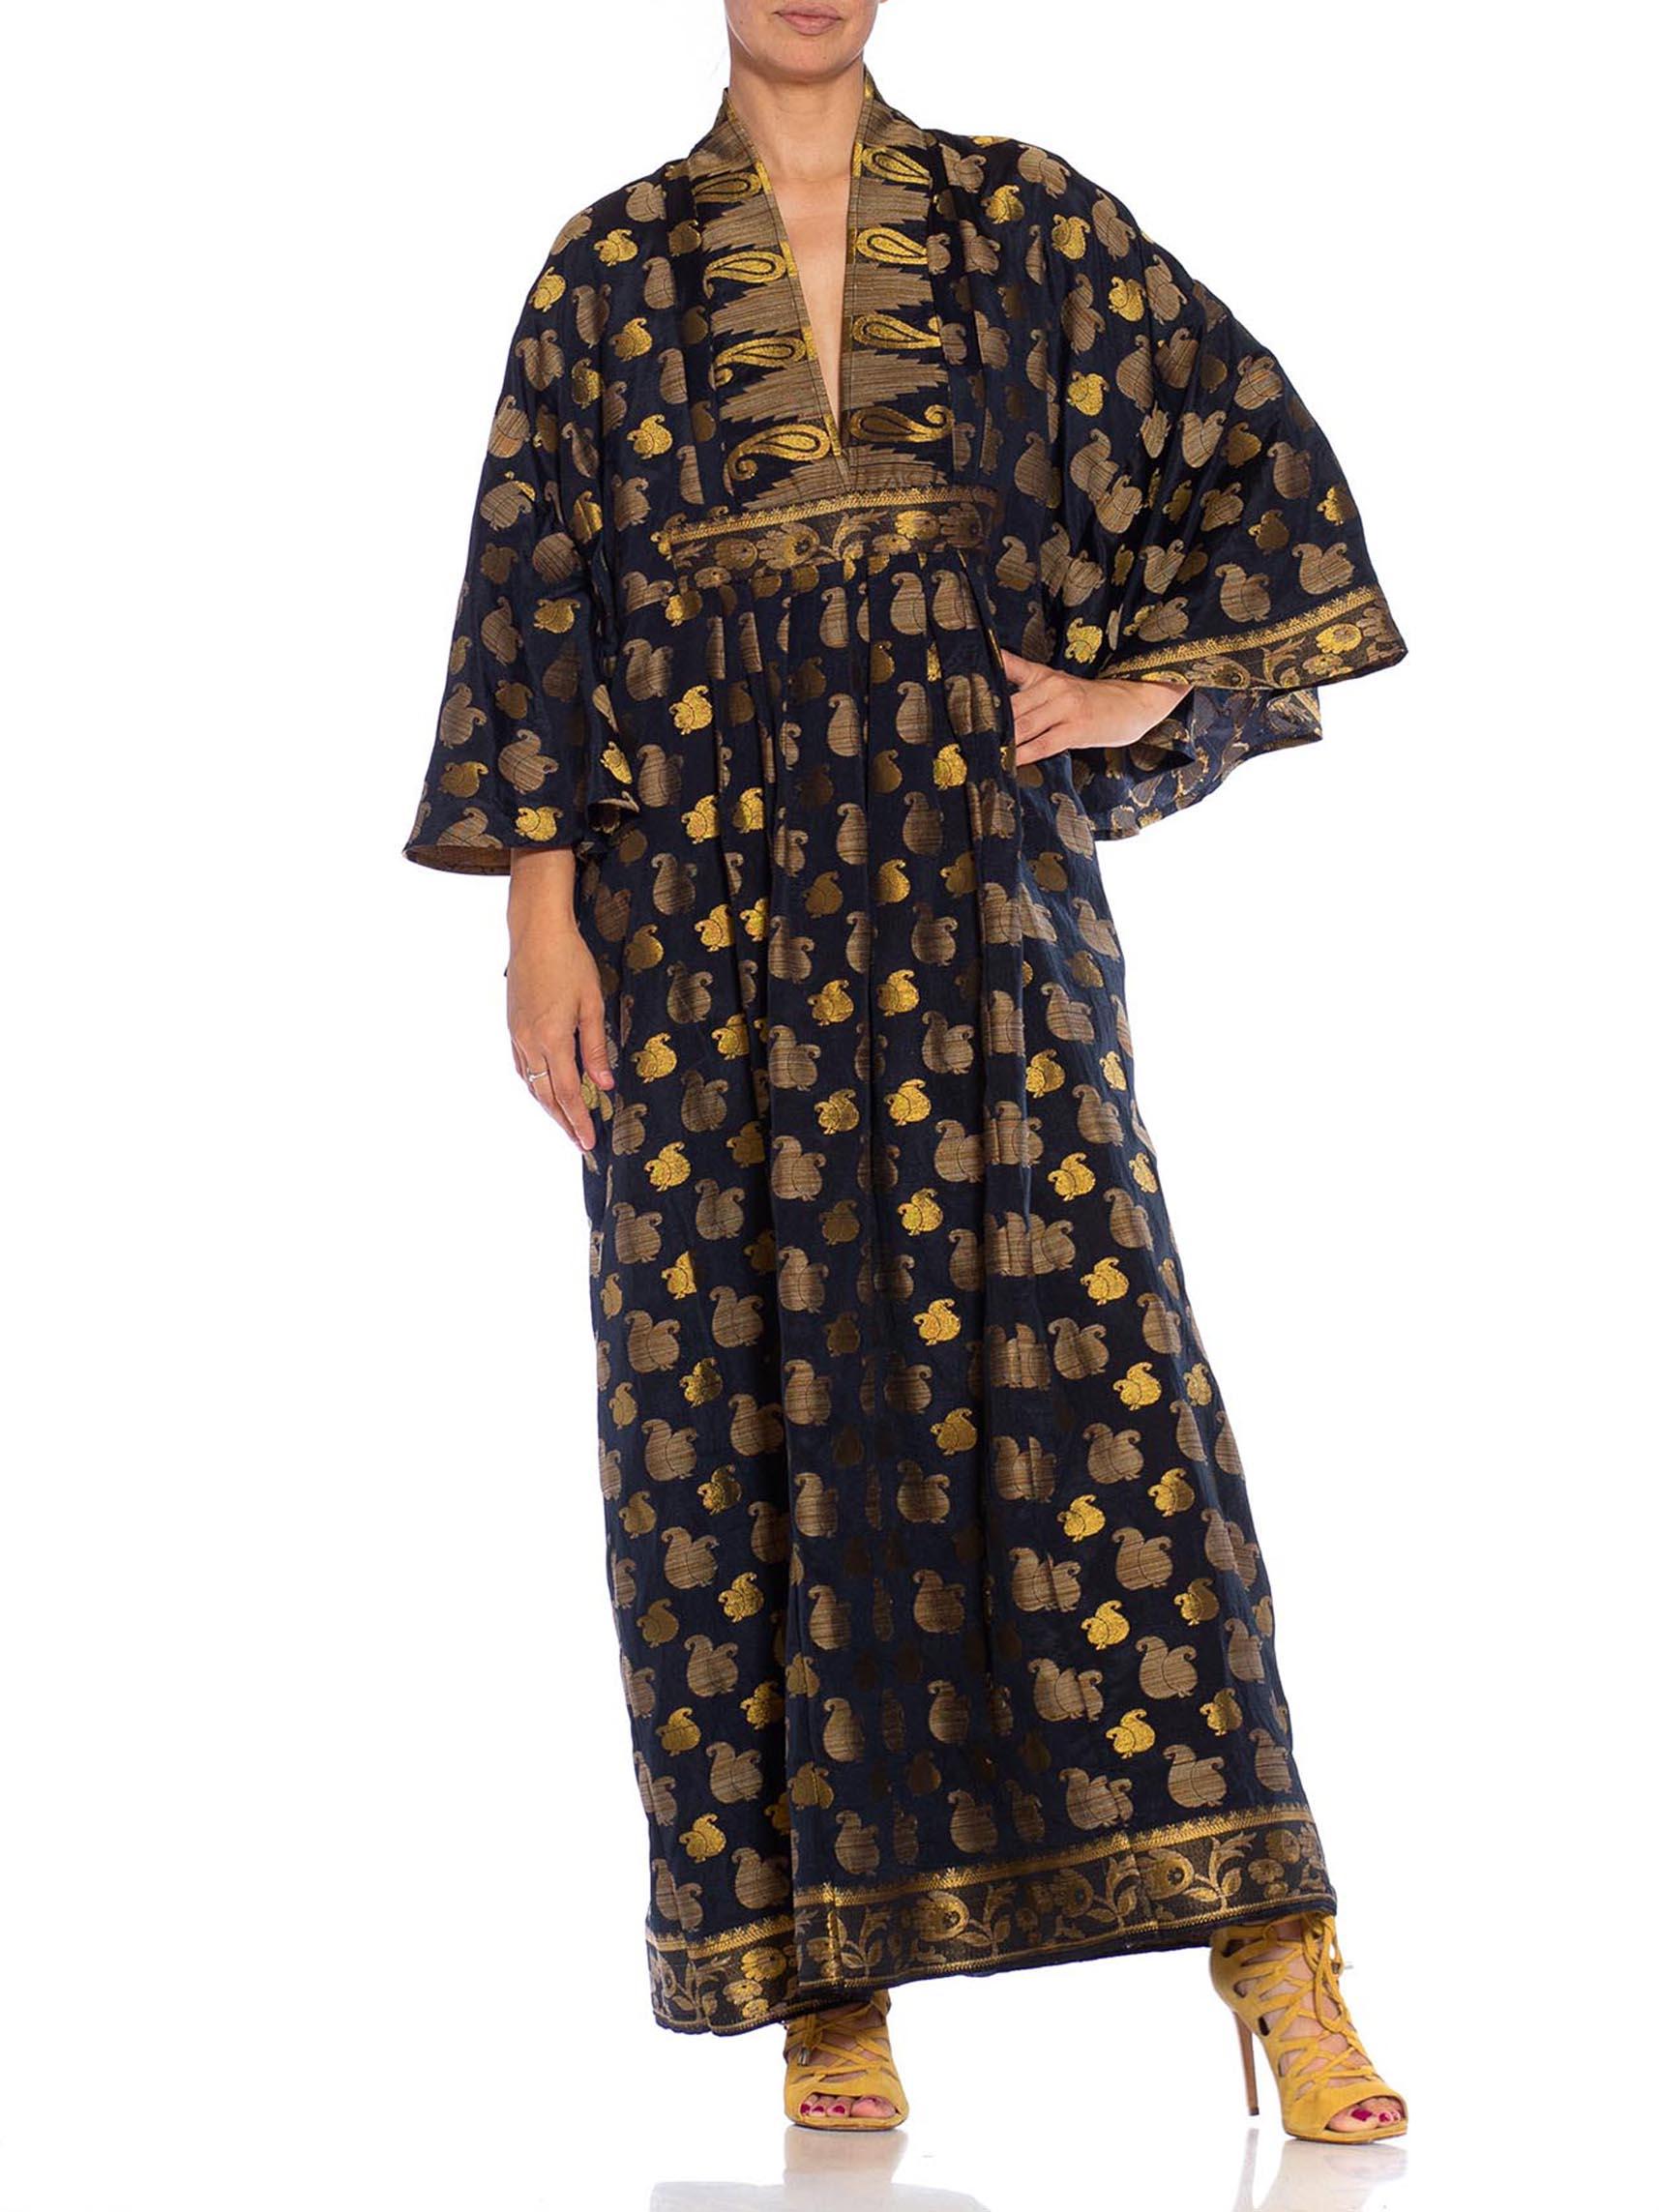 MORPHEW COLLECTION Black & Gold Metallic Silk Kaftan Made From Vintage Saris For Sale 3